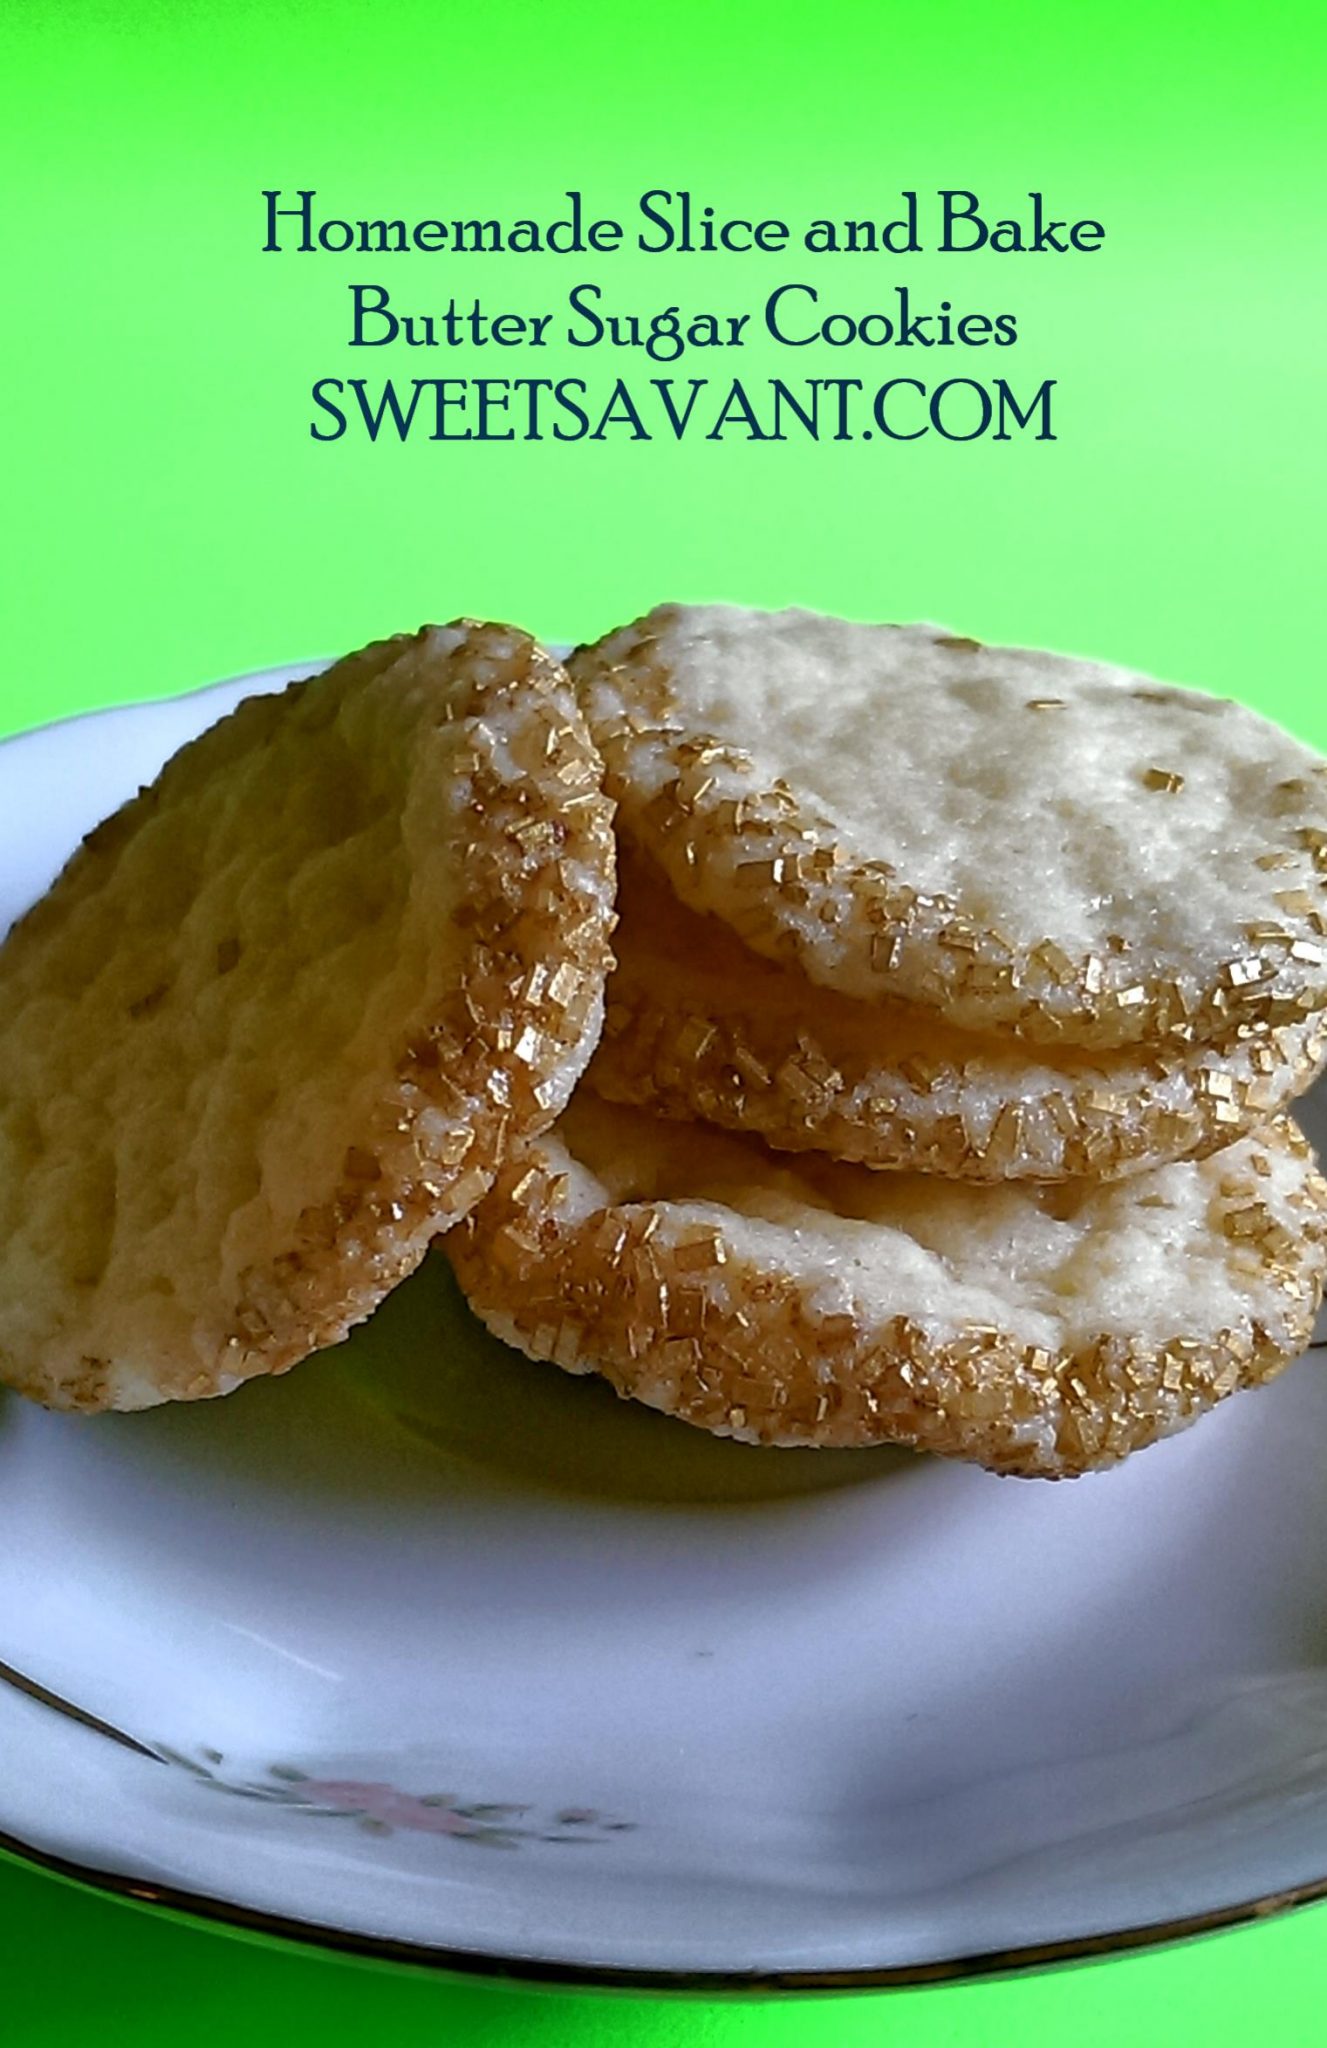 Homemade slice and bake butter sugar cookies sweetsavant.com America's best food blog